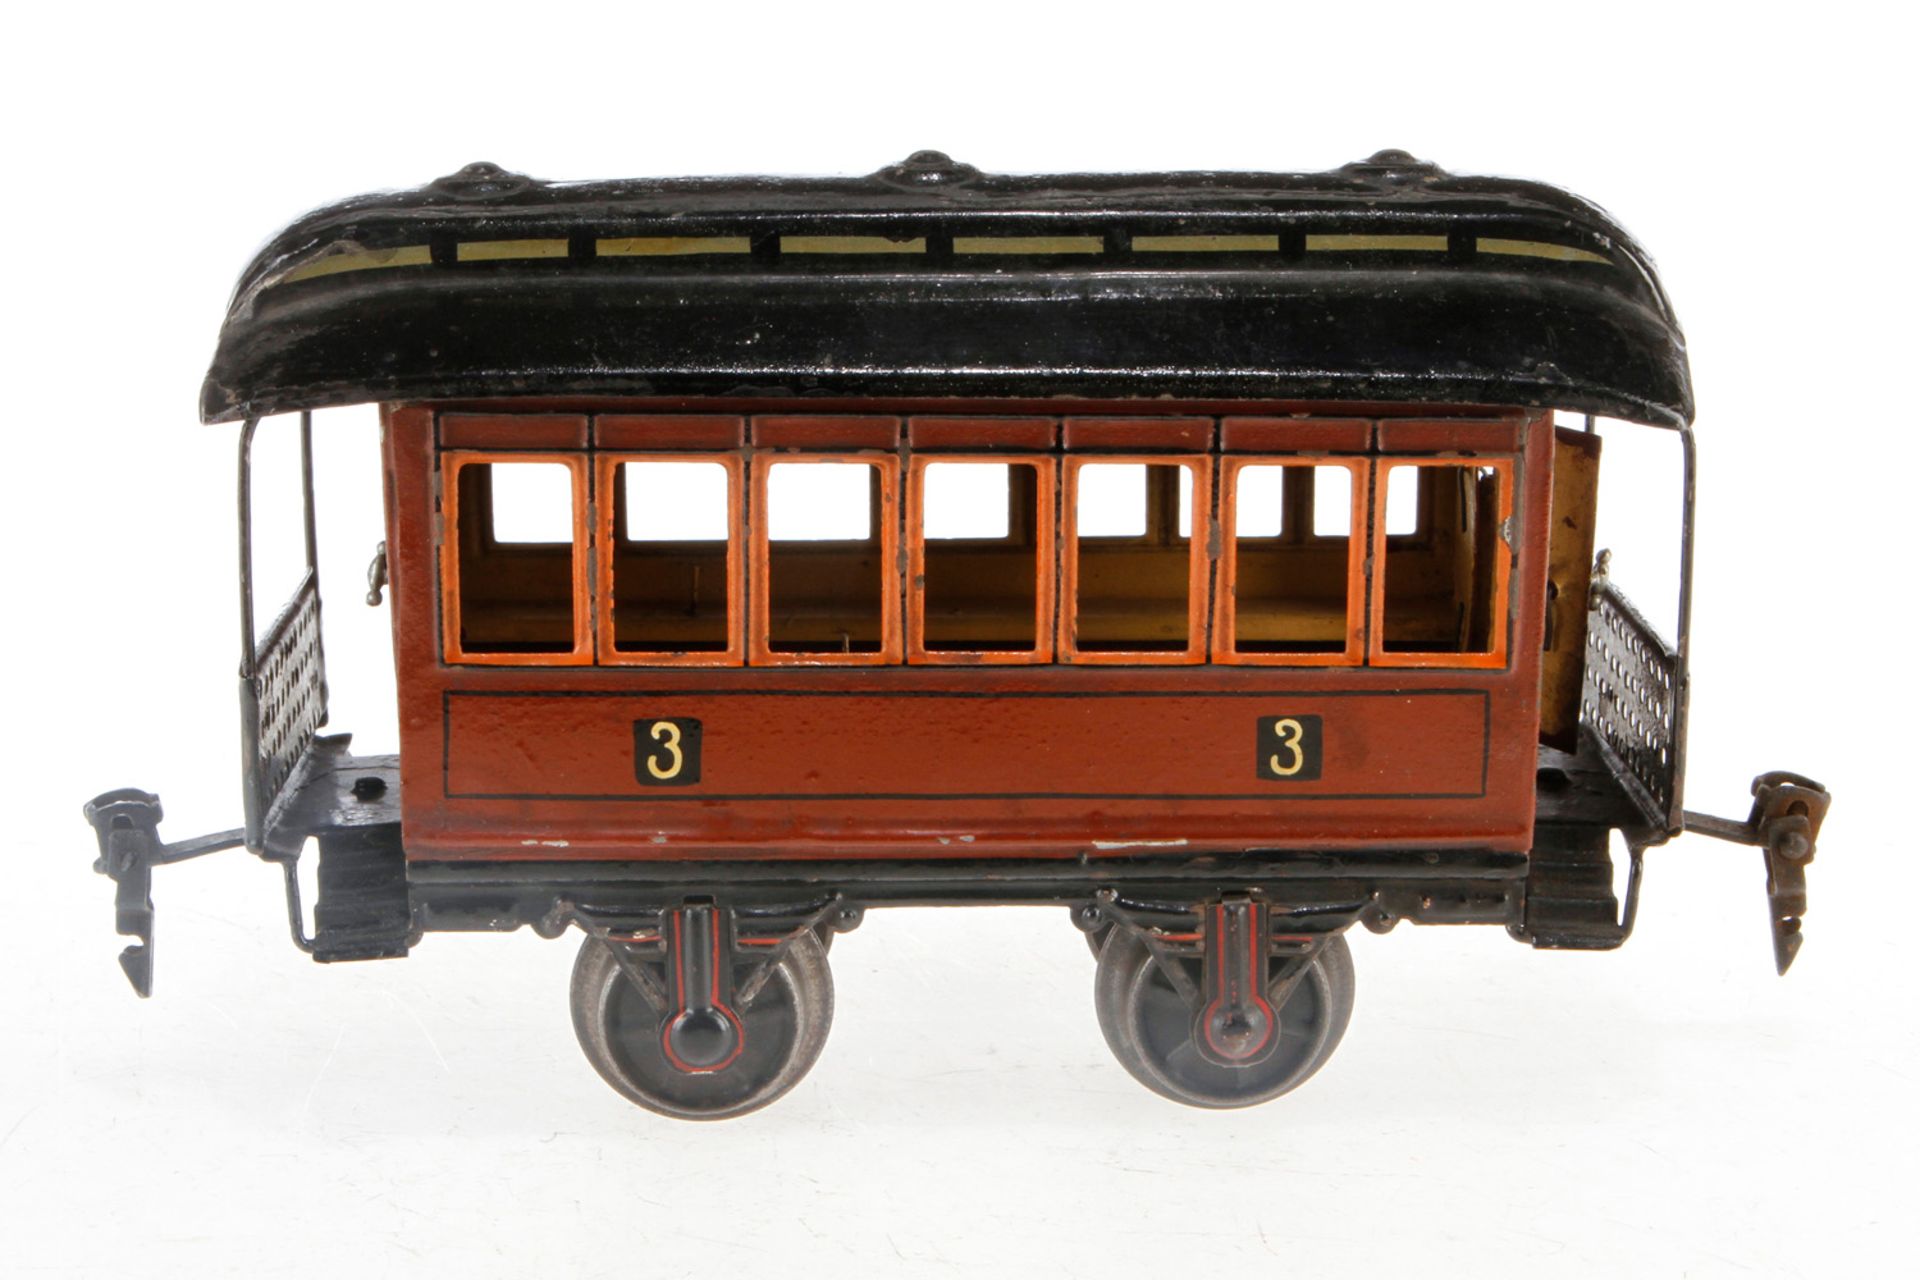 Märklin amerik. Personenwagen 1874, S 1, uralt, HL, mit 2 Sitzbänken und 2 AT, Sitzstifte NV, LS